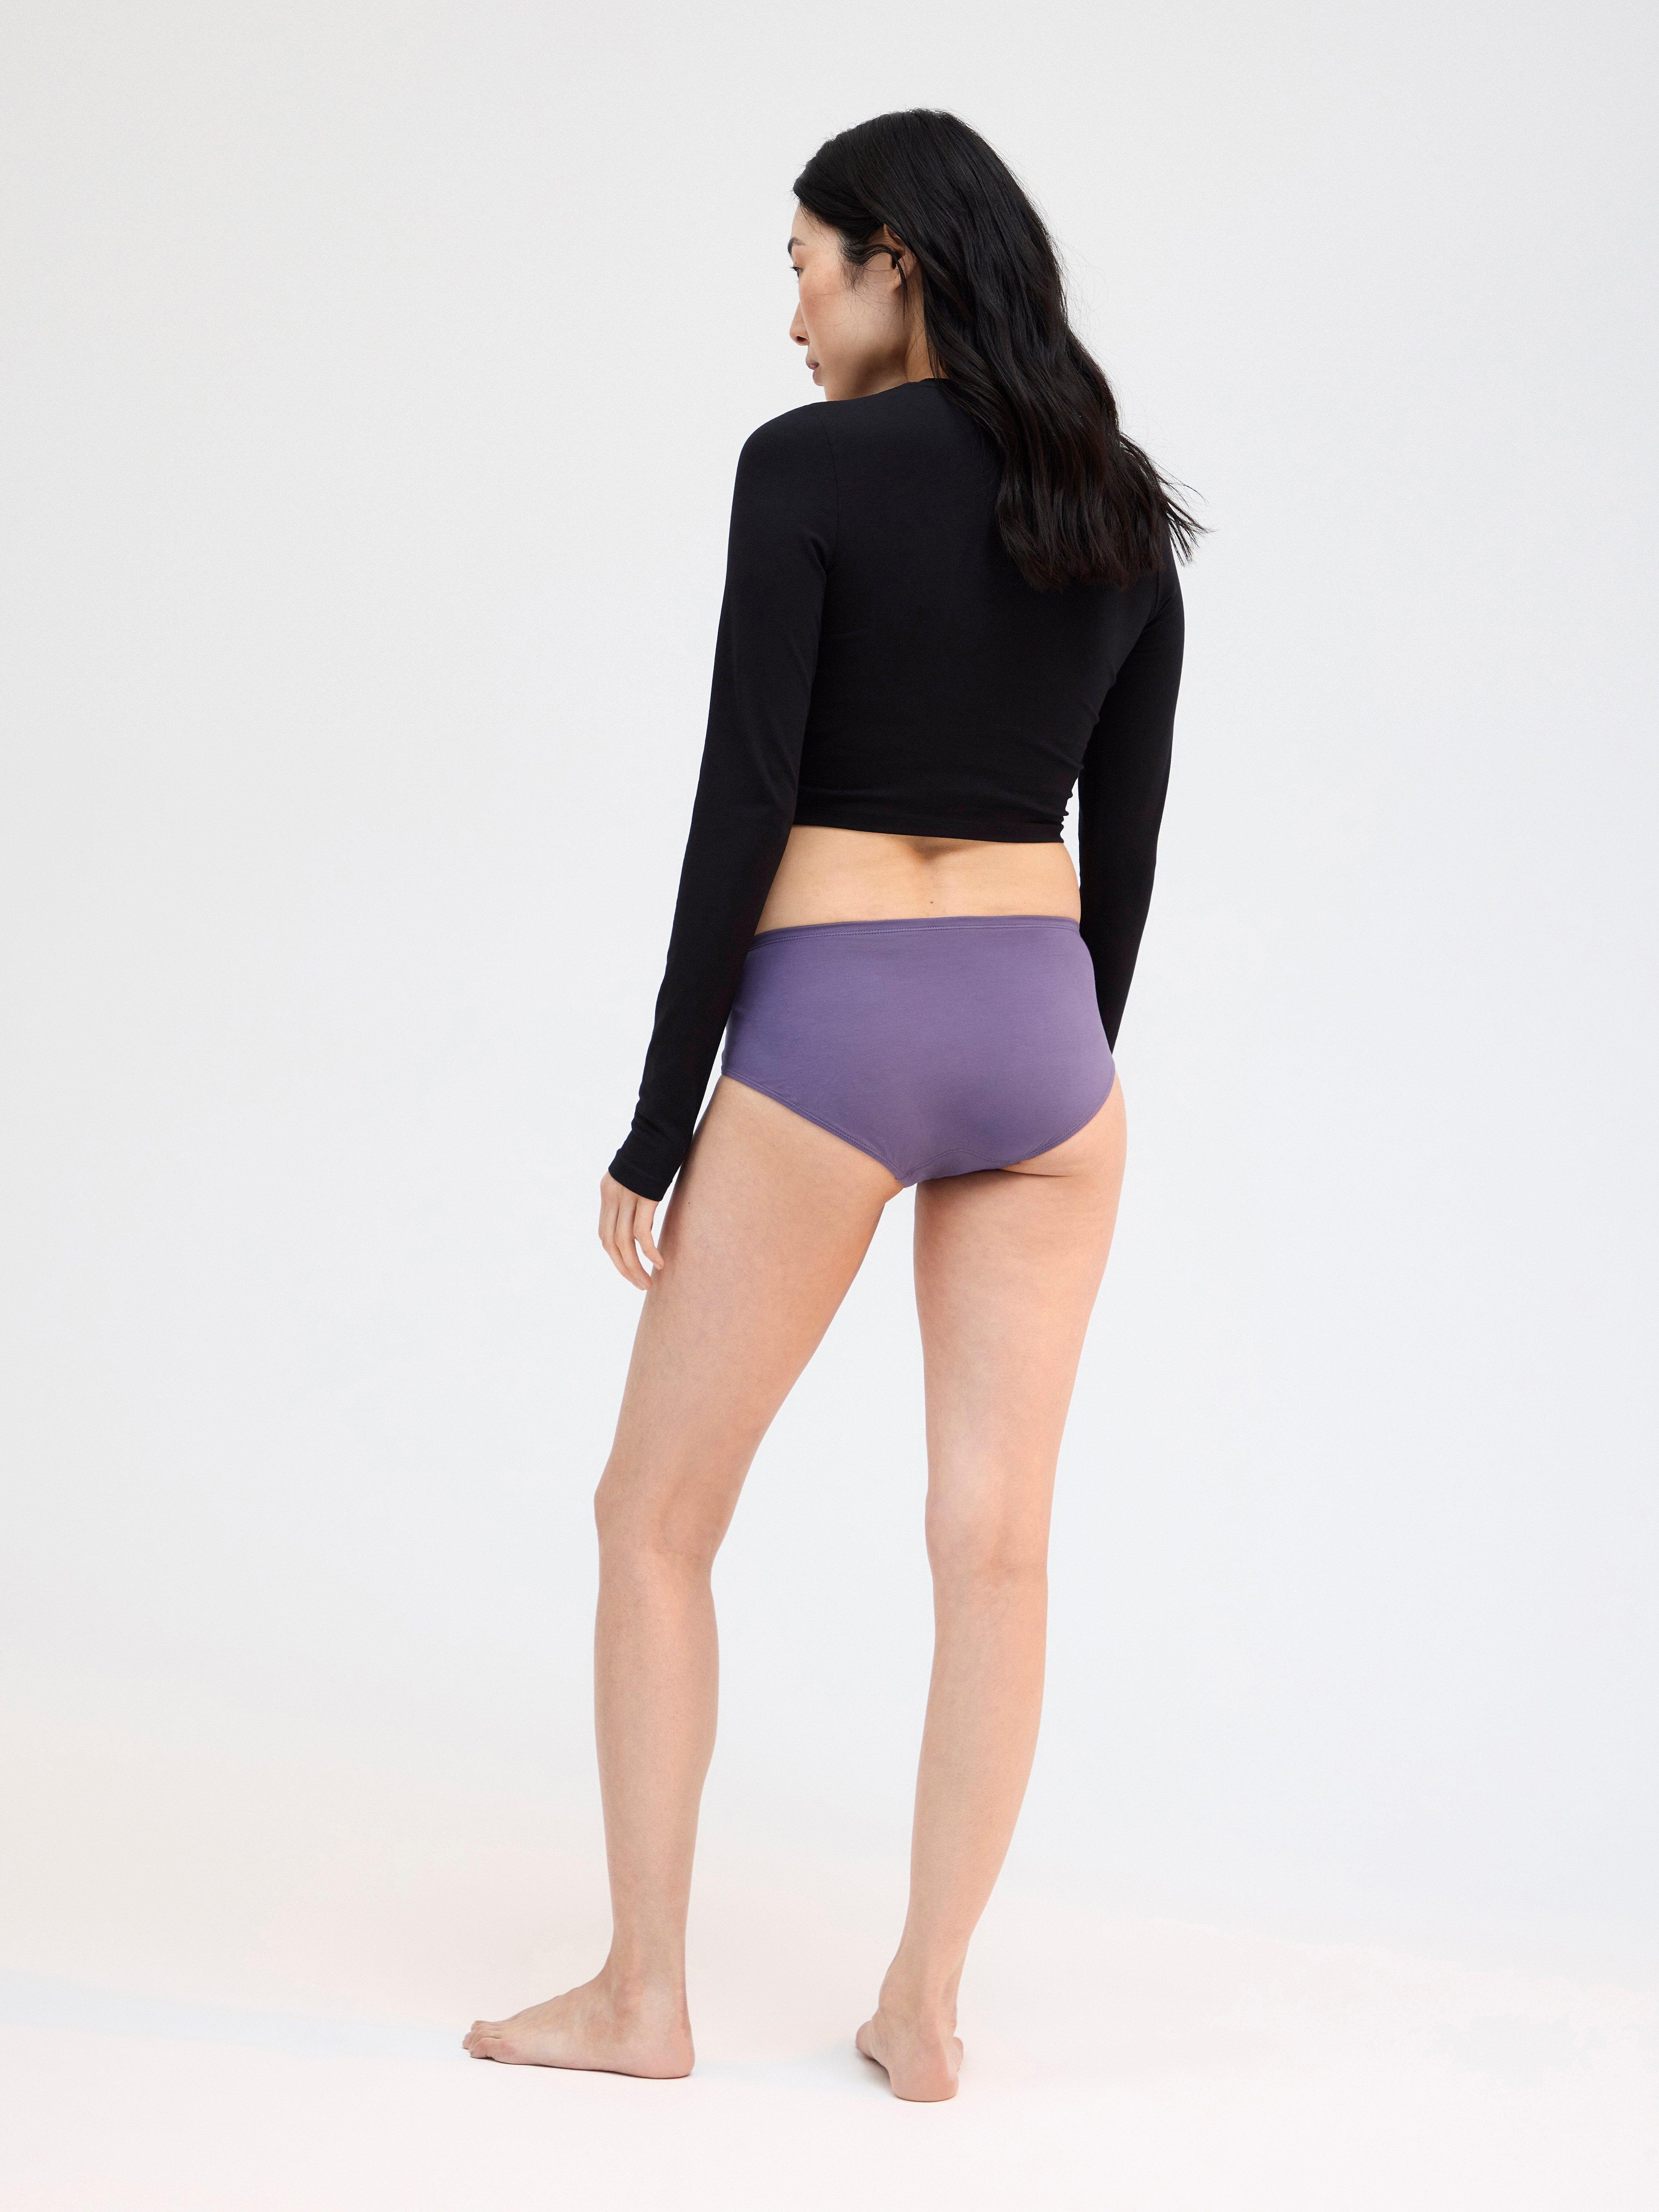 Hiphugger – Period-Proof Underwear